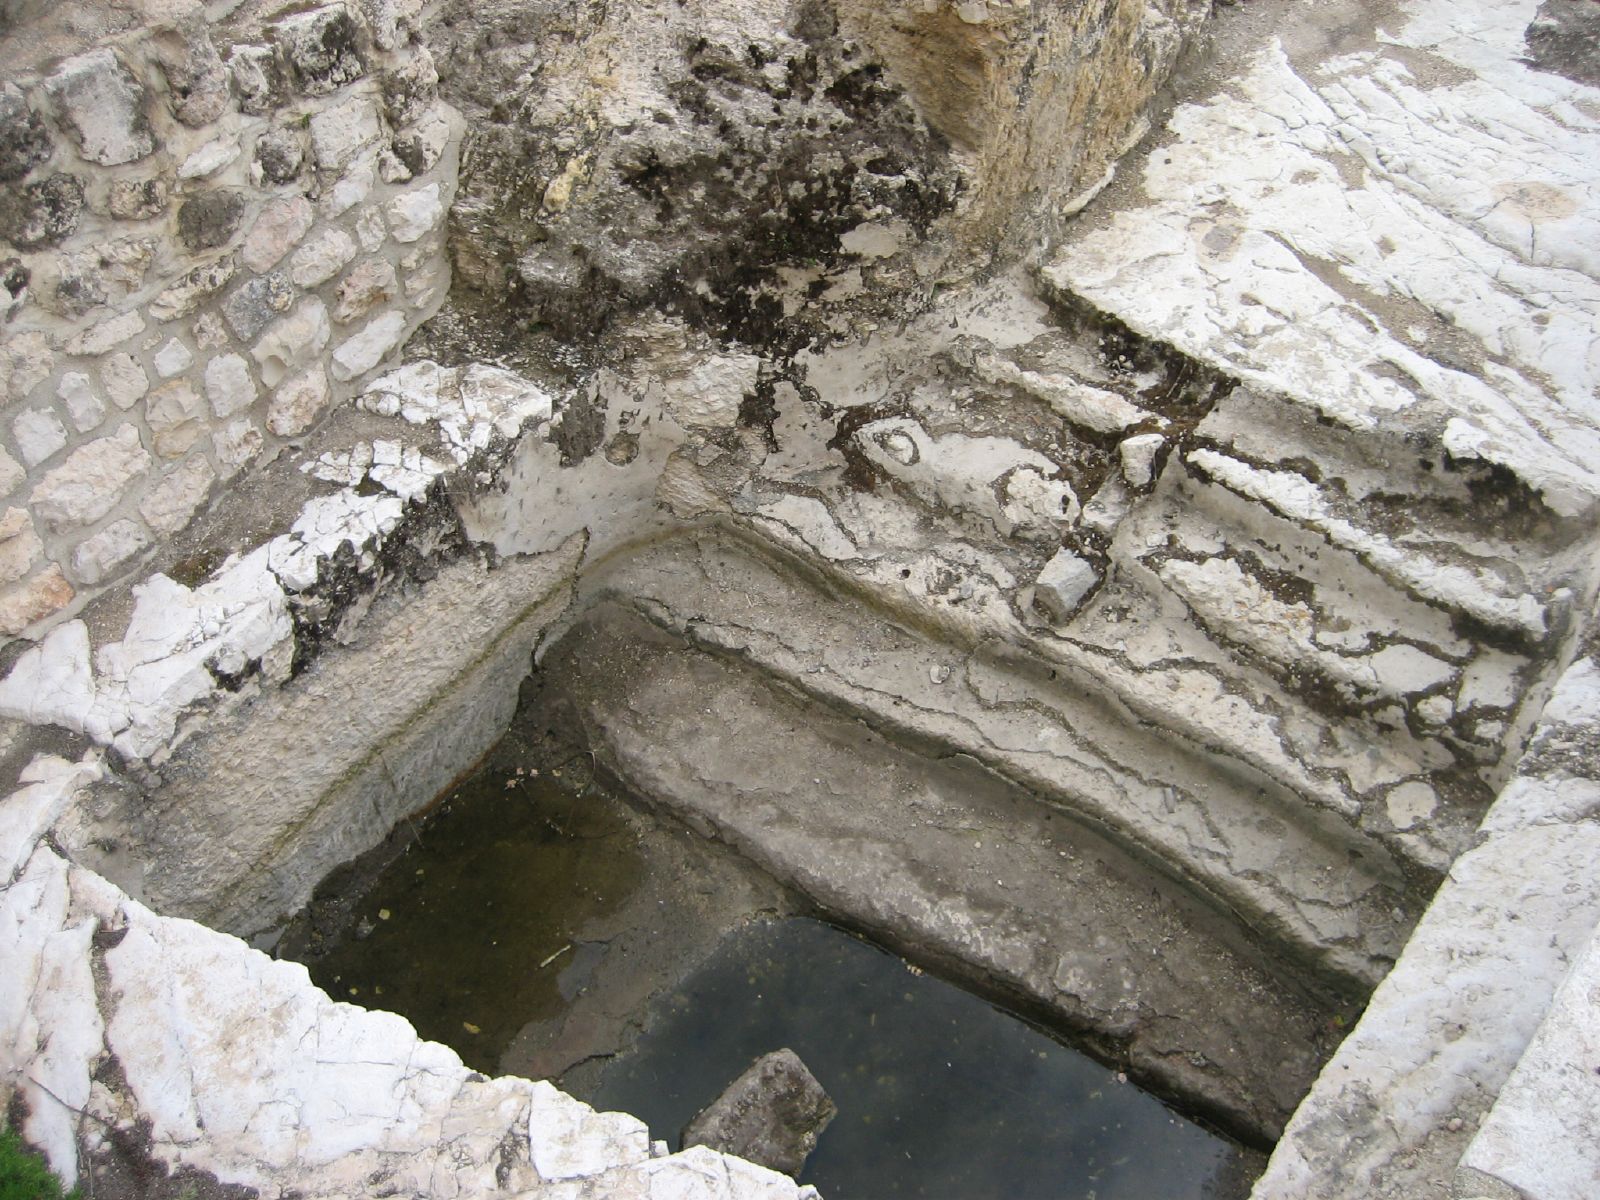 Yitro: Tevilah – Immersion in a Mikveh